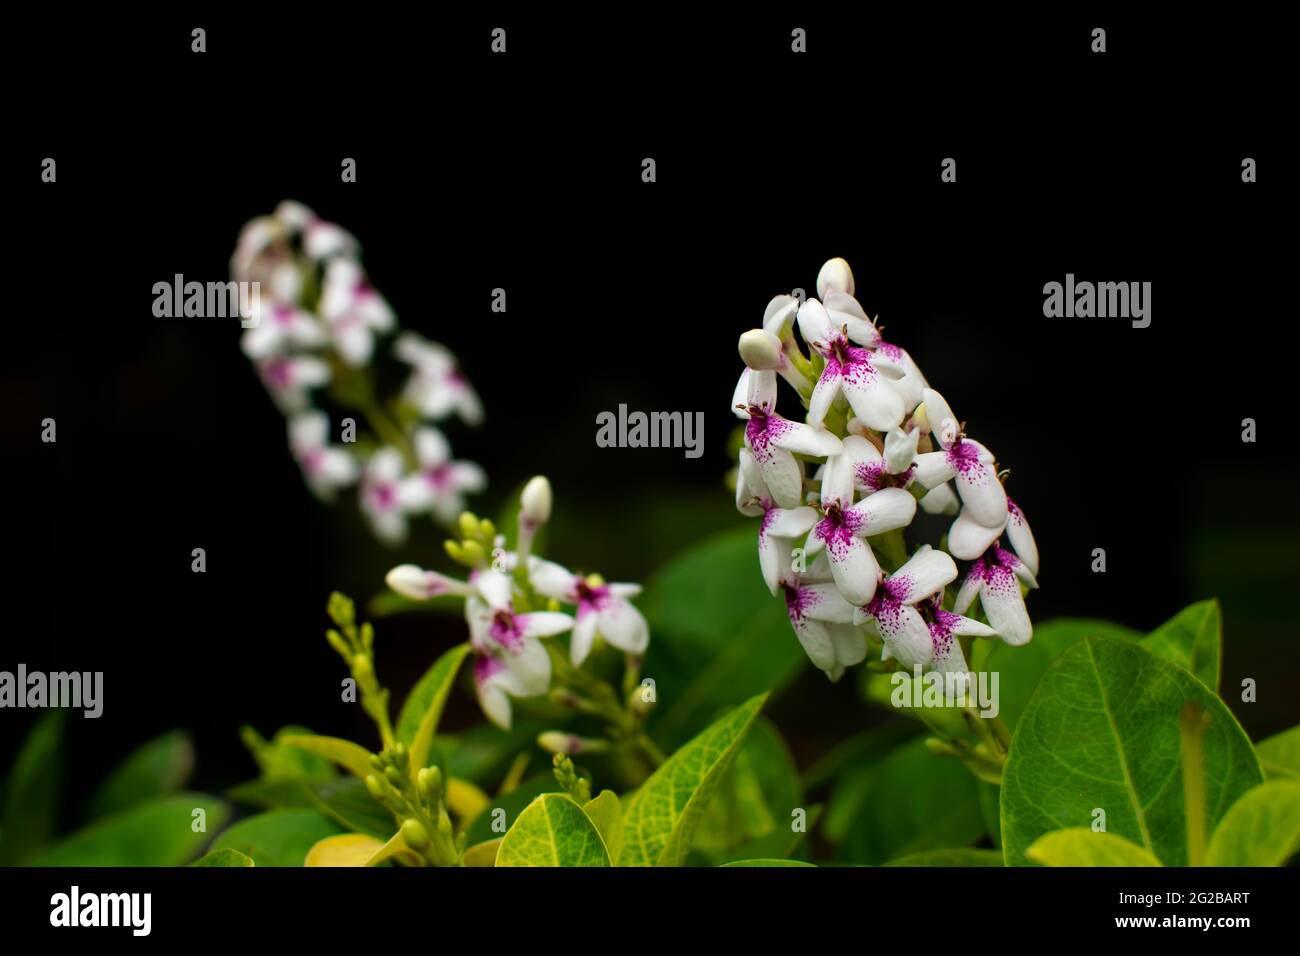 Flowers of Pseuderanthemum carruthersii also known as Variegated False Eranthemum. Used selective focus. Stock Photo